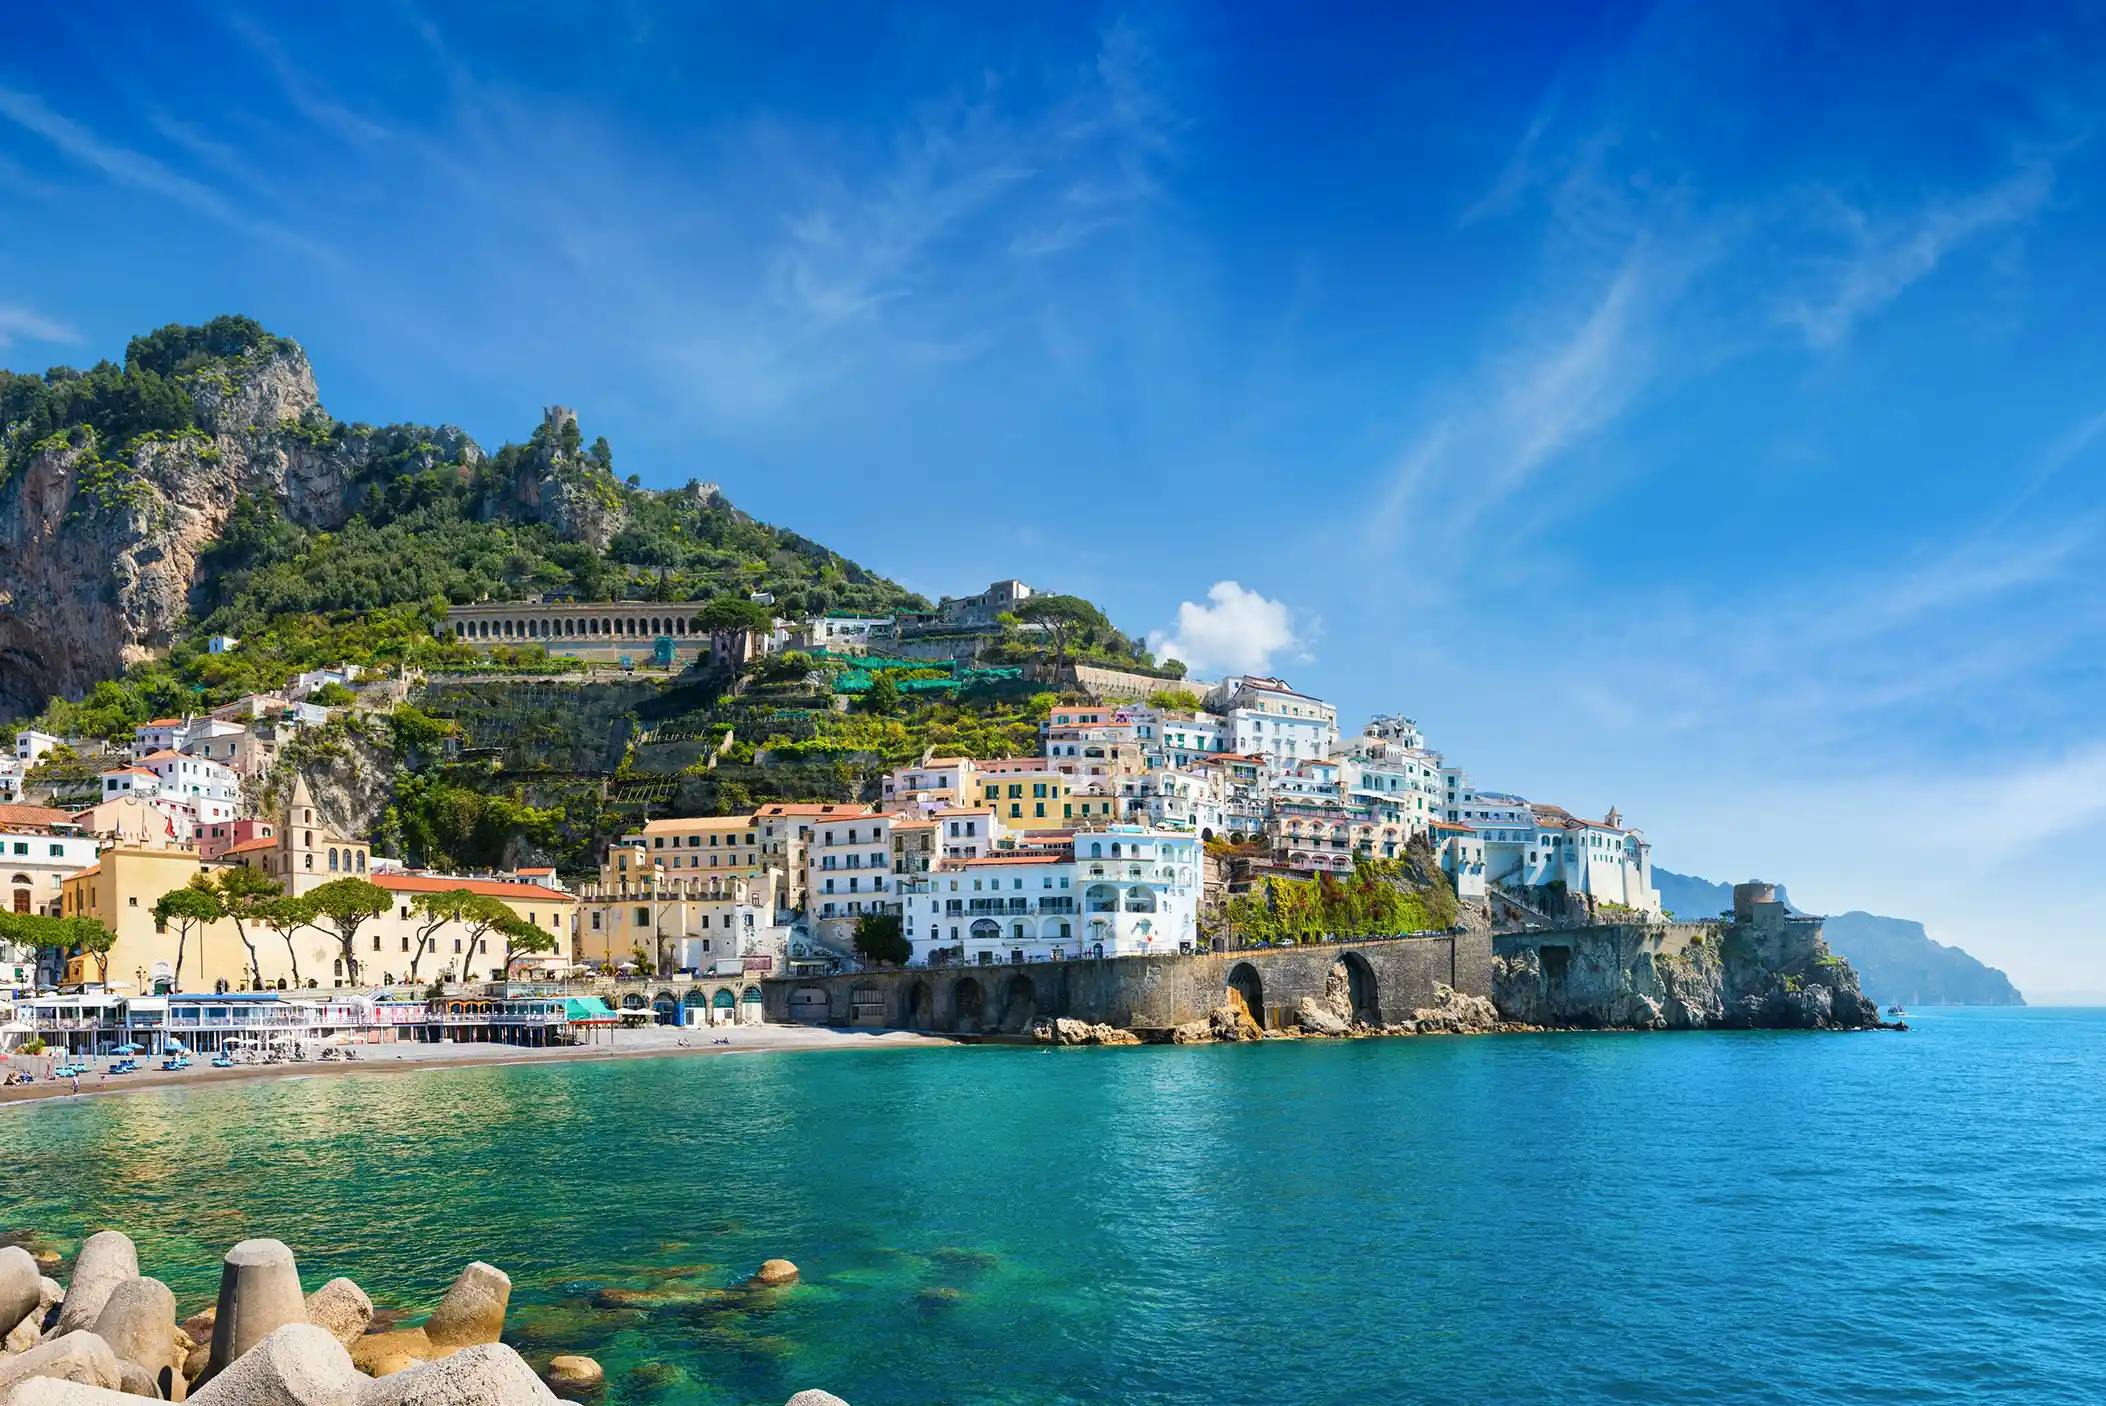 Coastal view of Amalfi, Italy